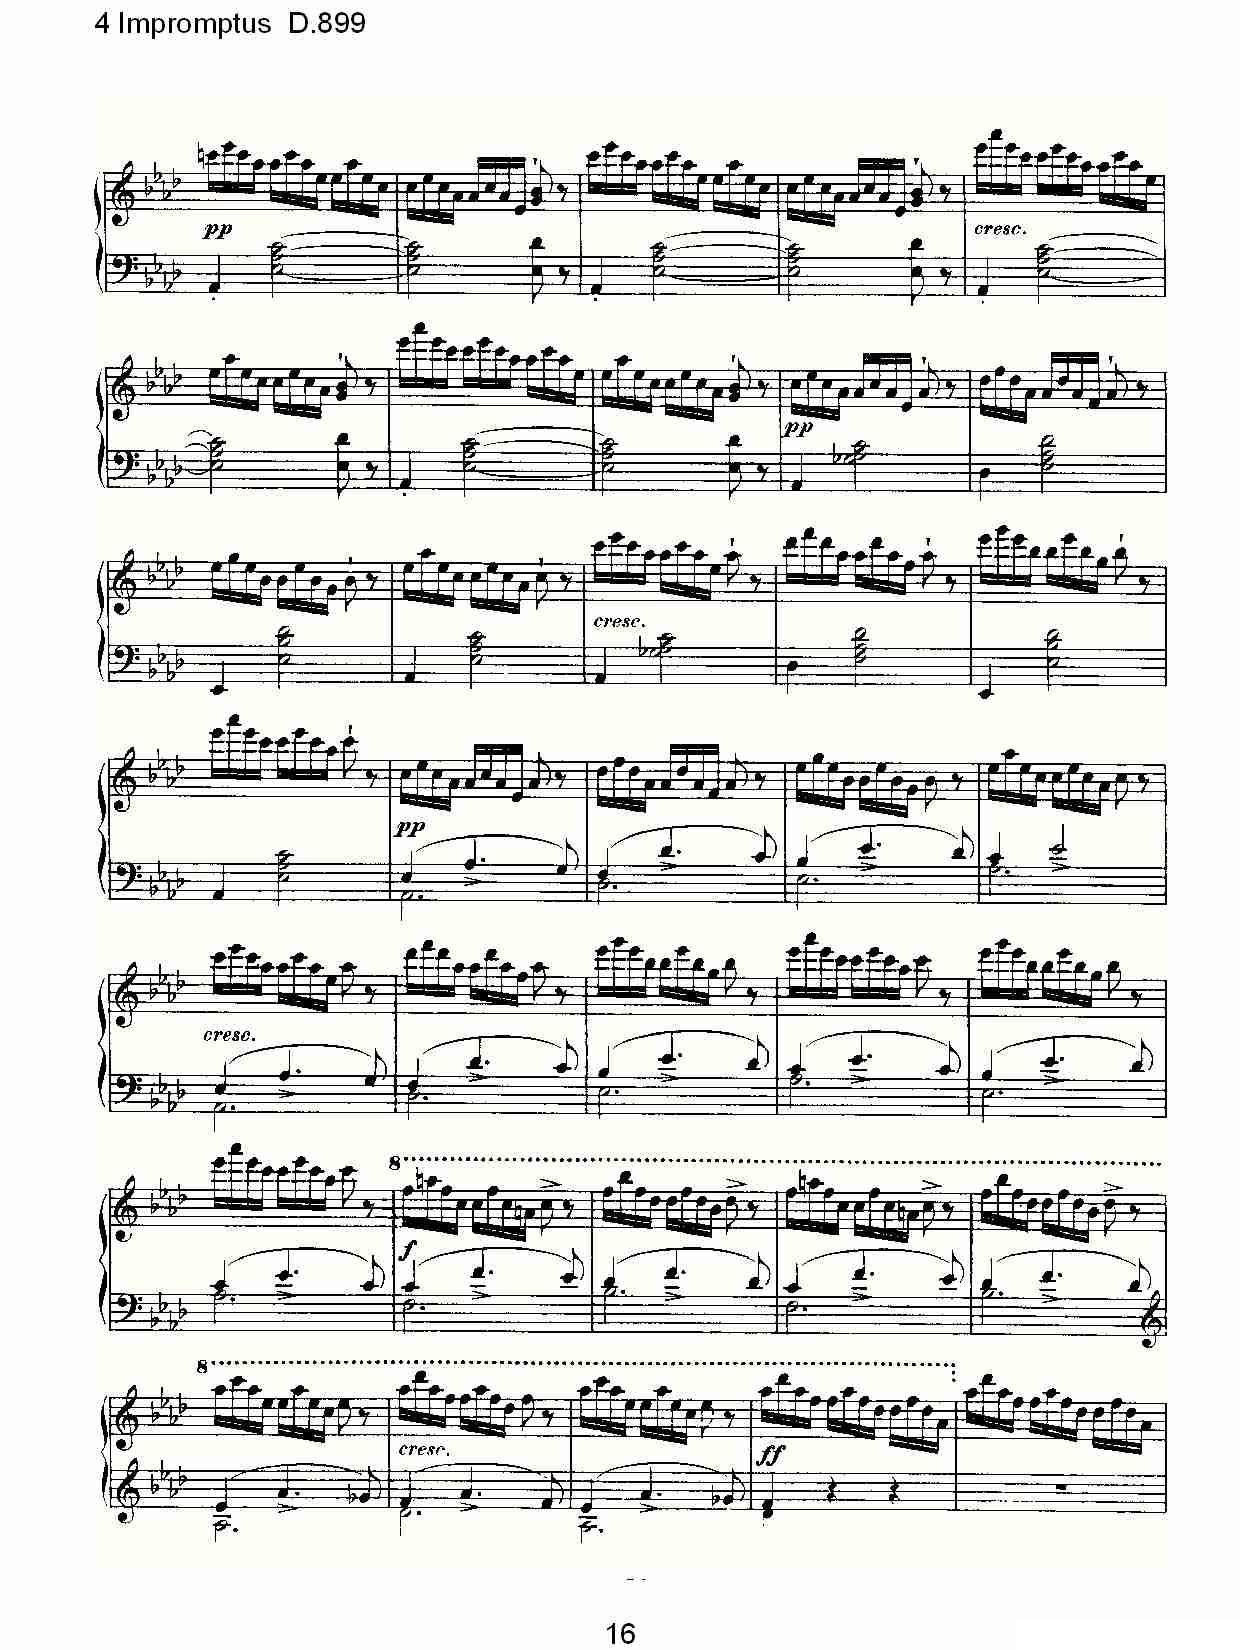 4 Impromptus D.899（4人即兴演奏 D.899）钢琴曲谱（图16）